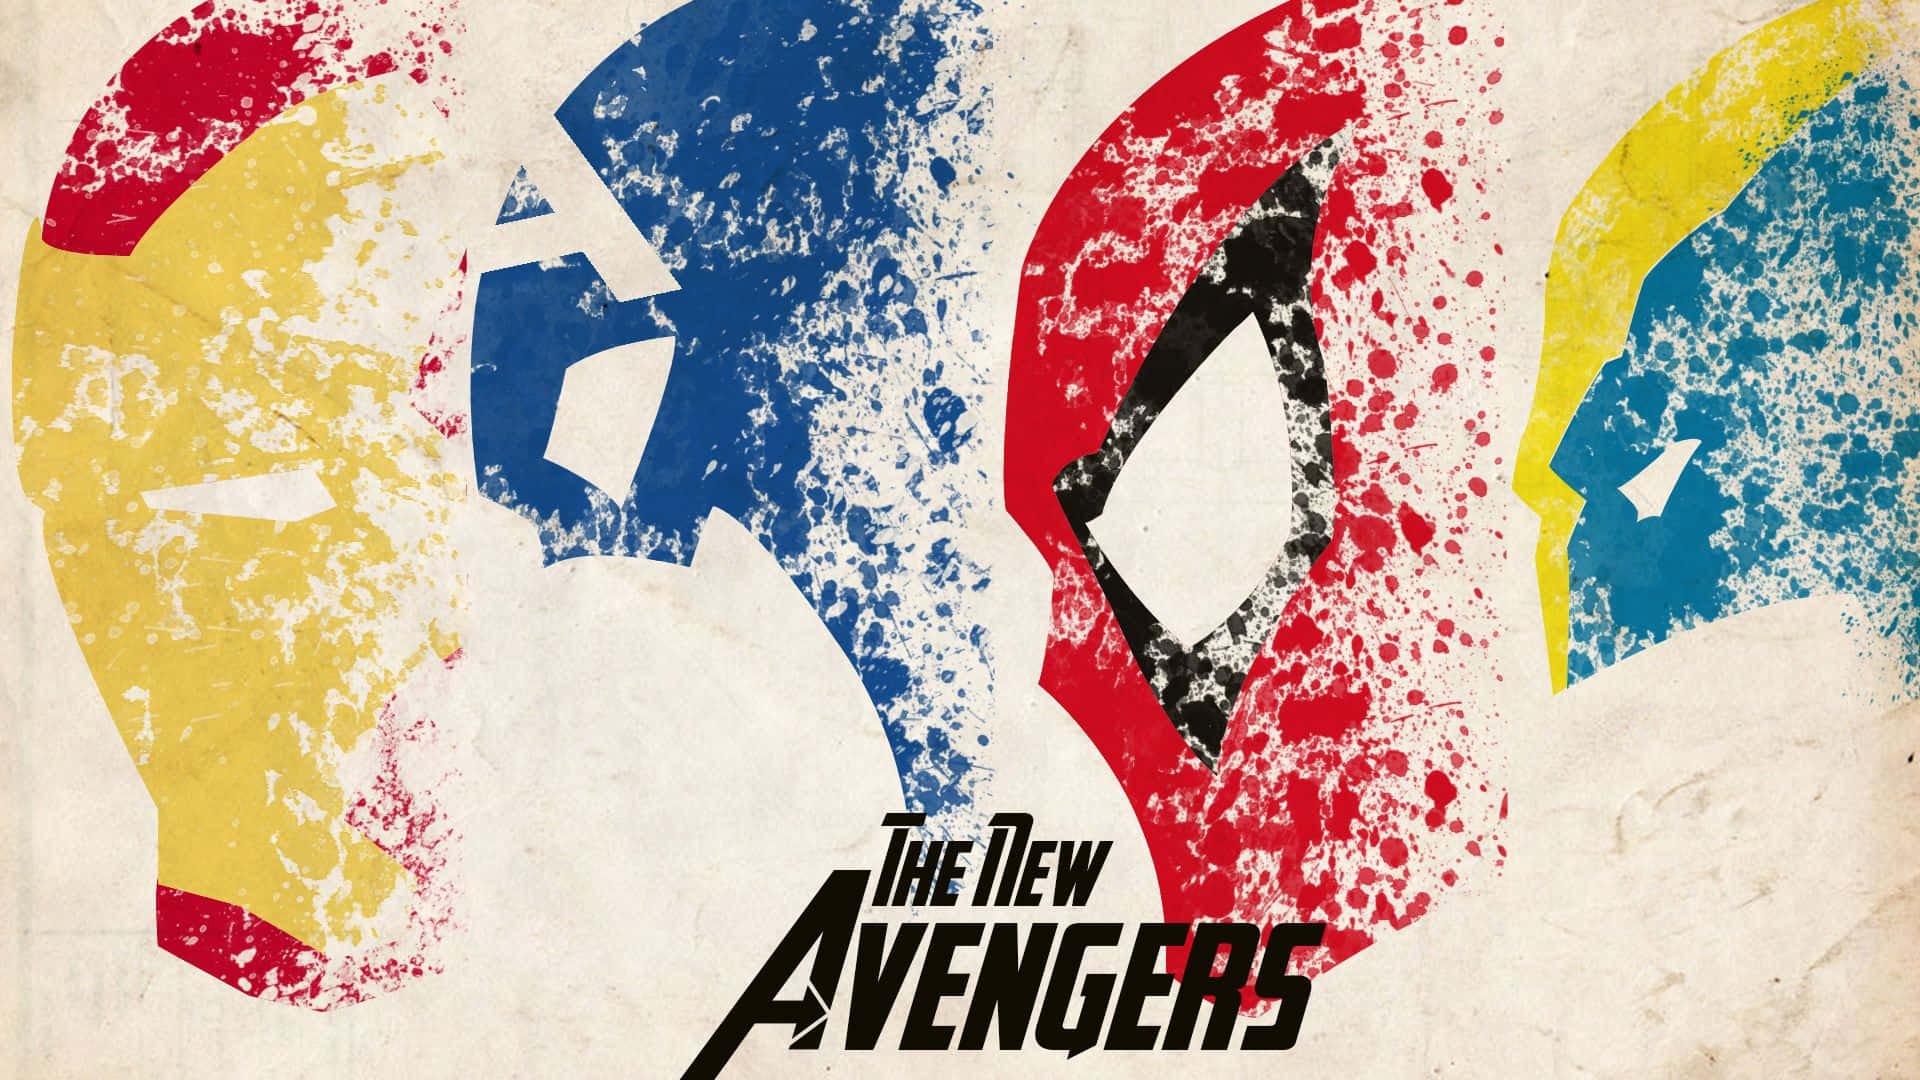 New Avengers Team in Action Wallpaper